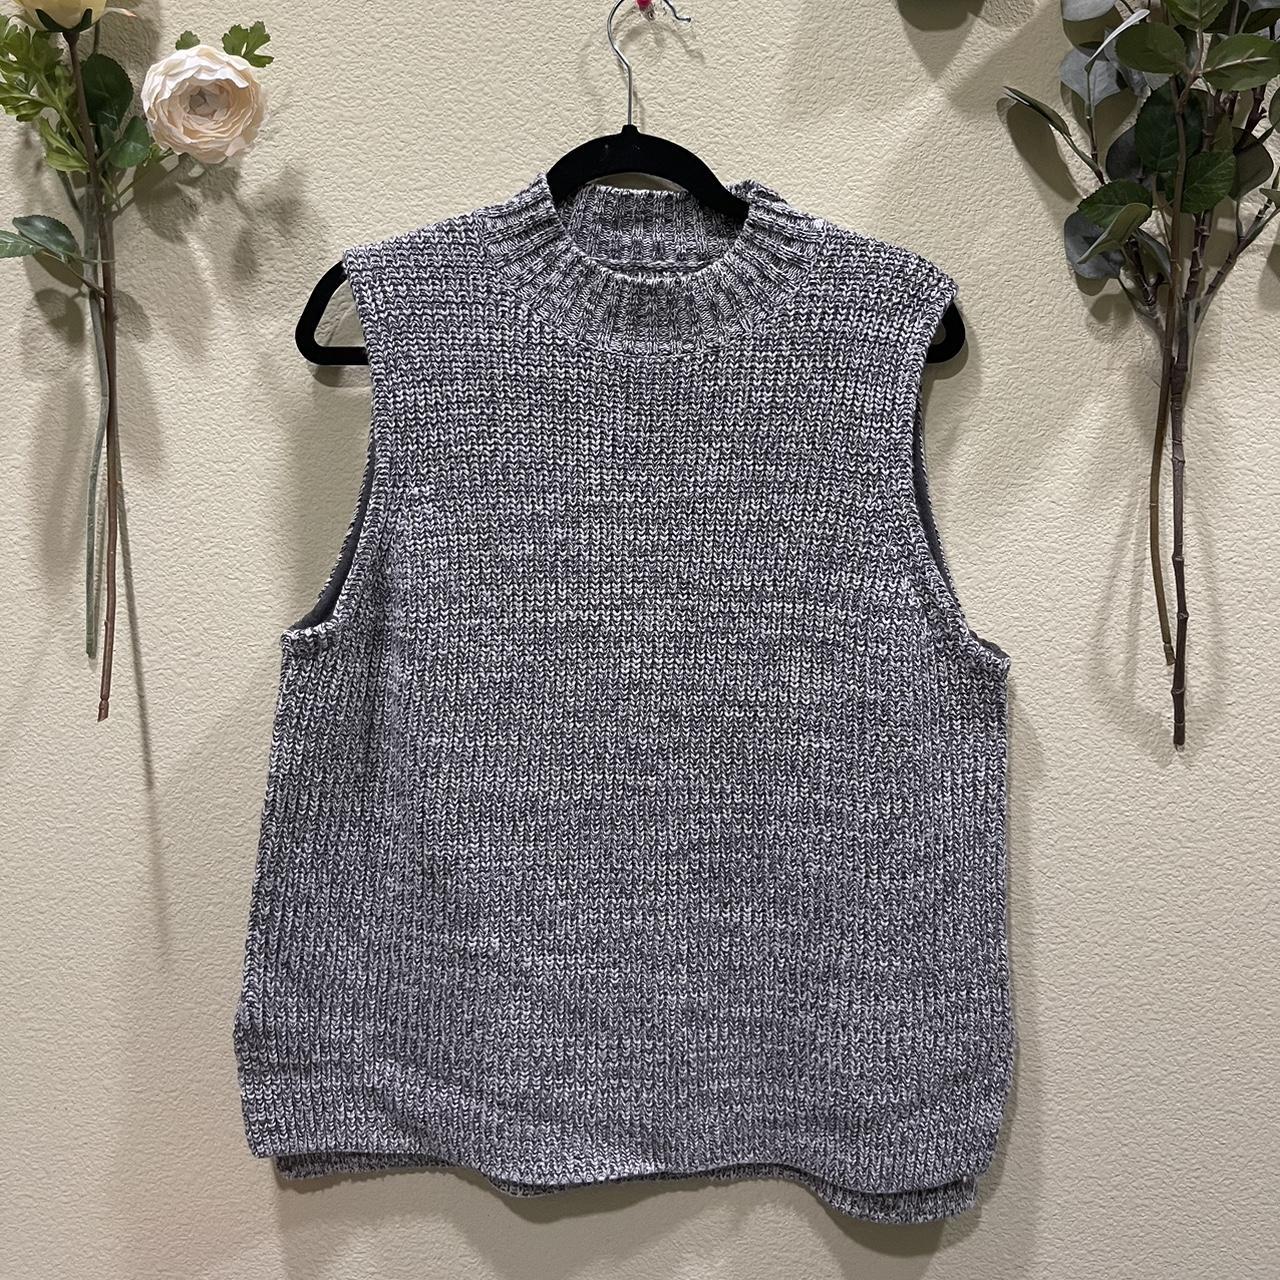 Jcrew gray sweater knit vest (runs small) - Depop